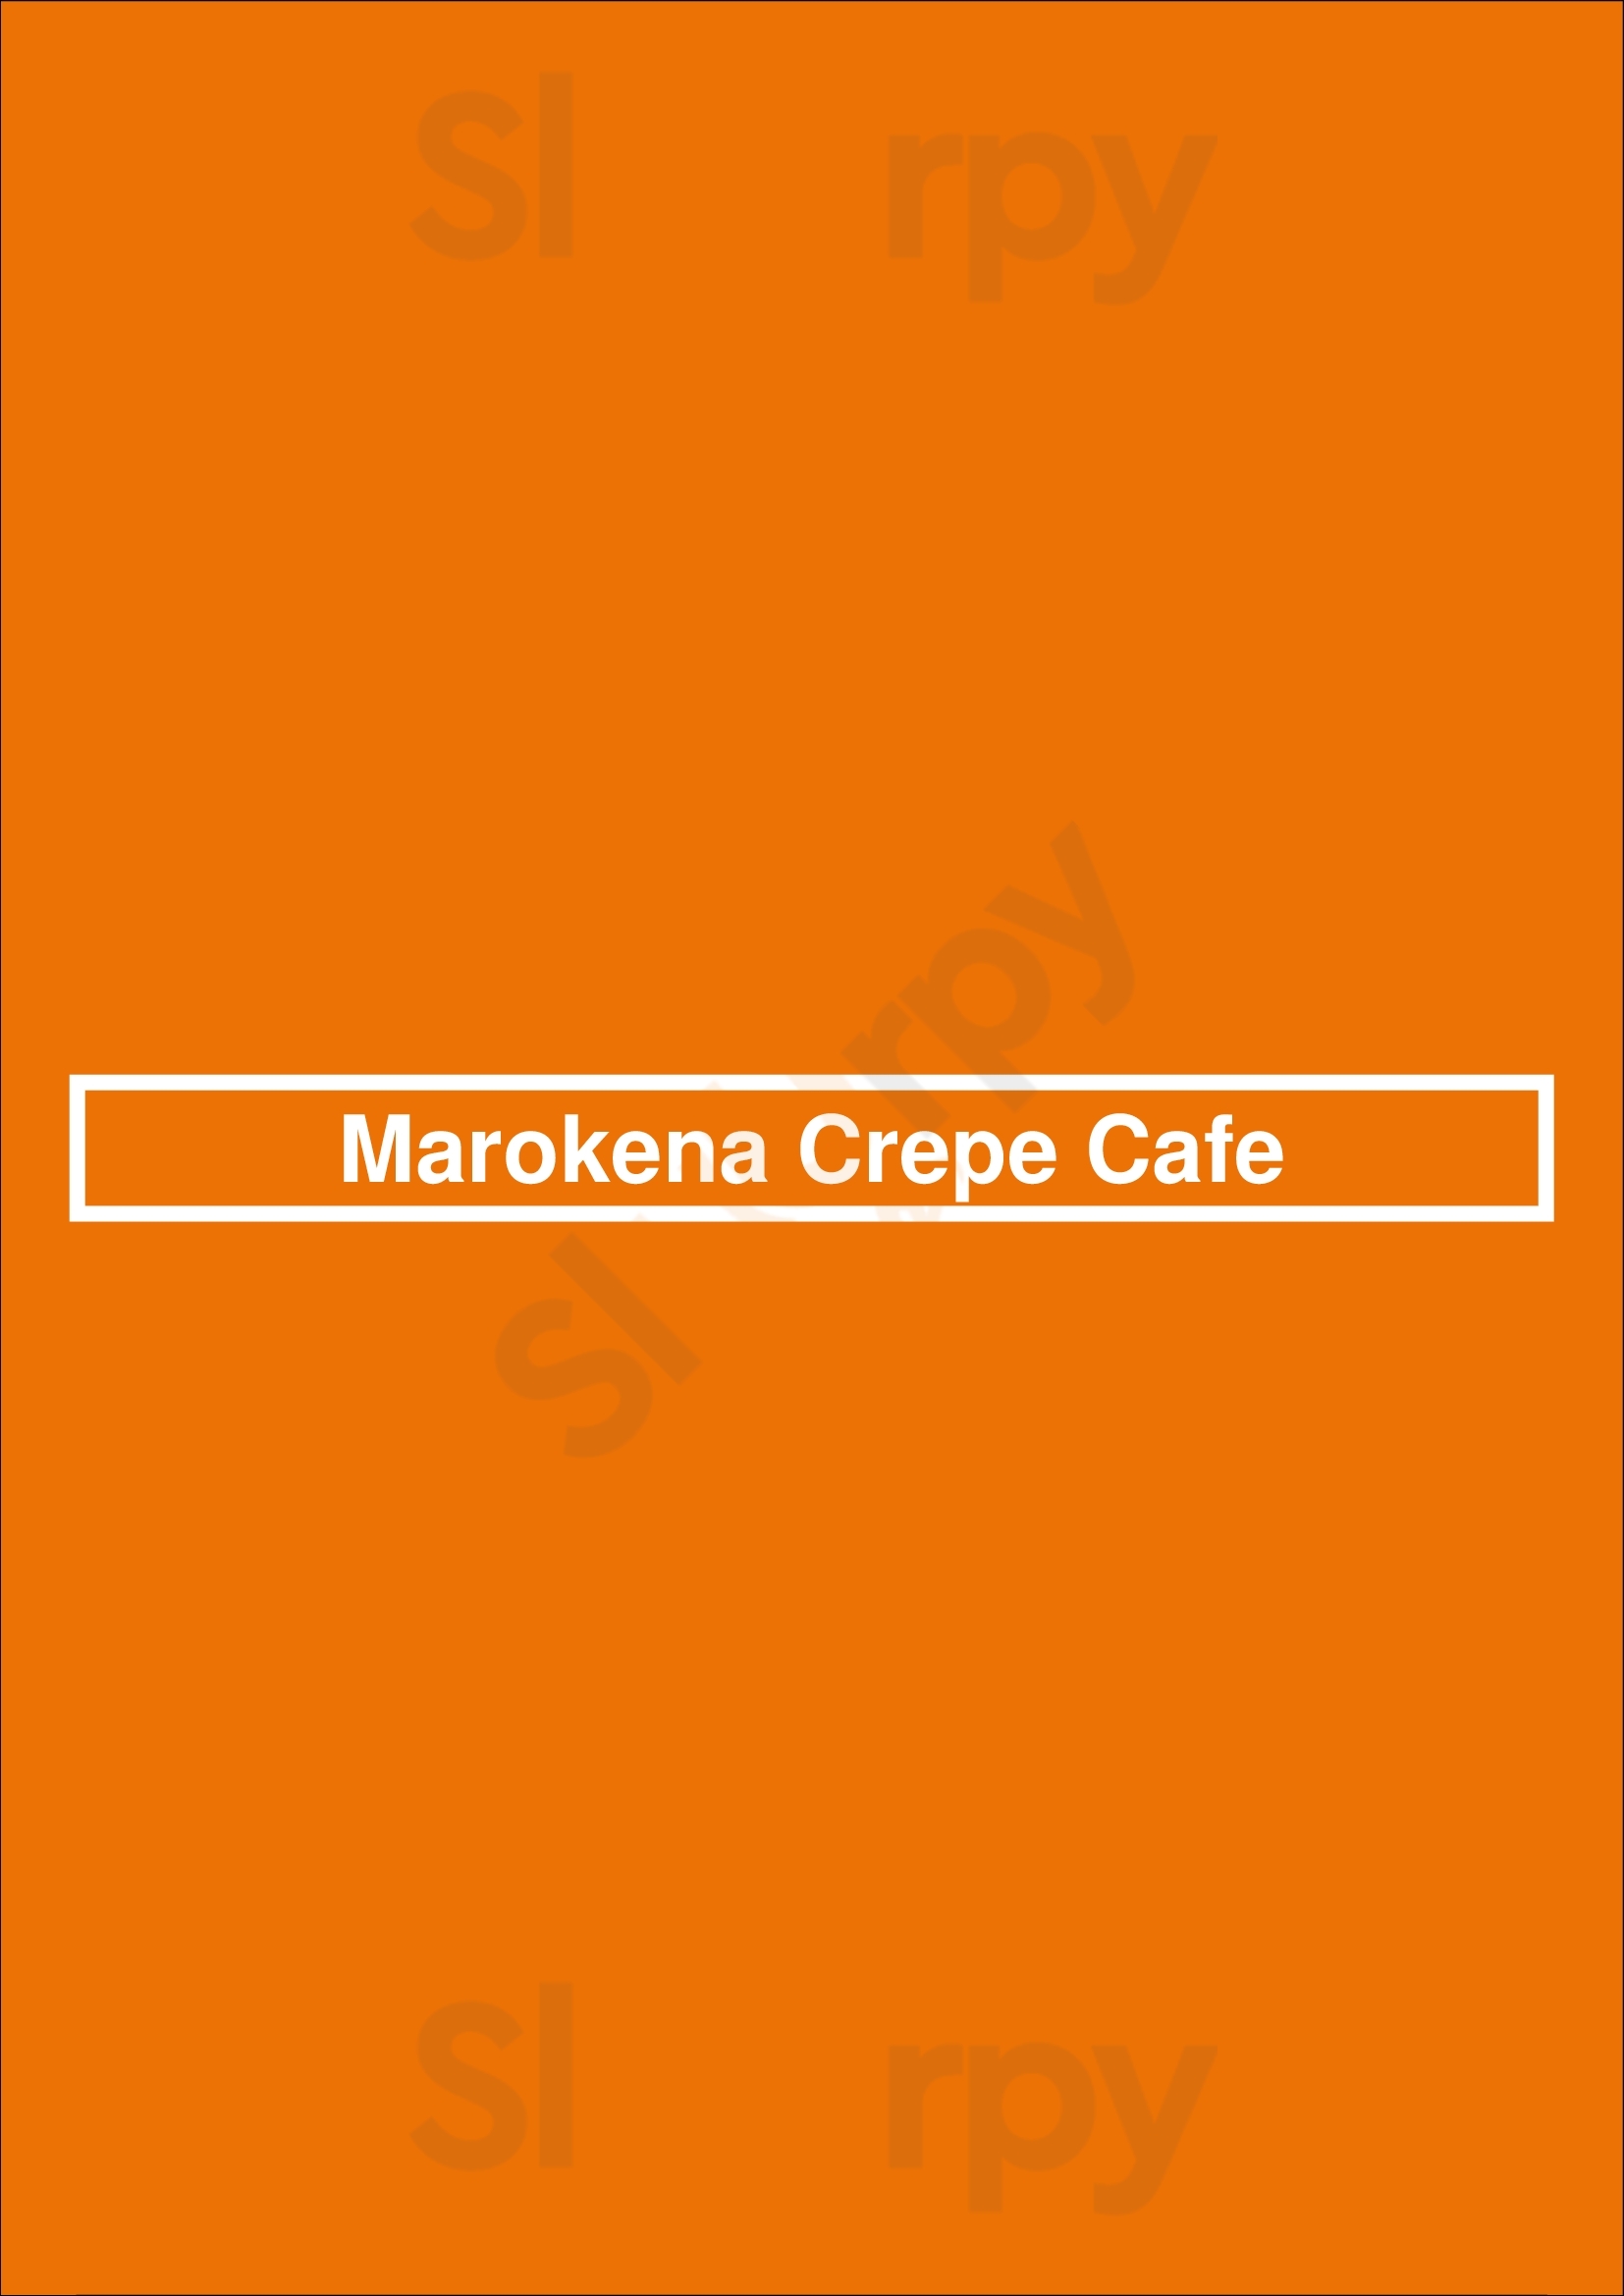 Marokena Crepe Cafe Regina Menu - 1